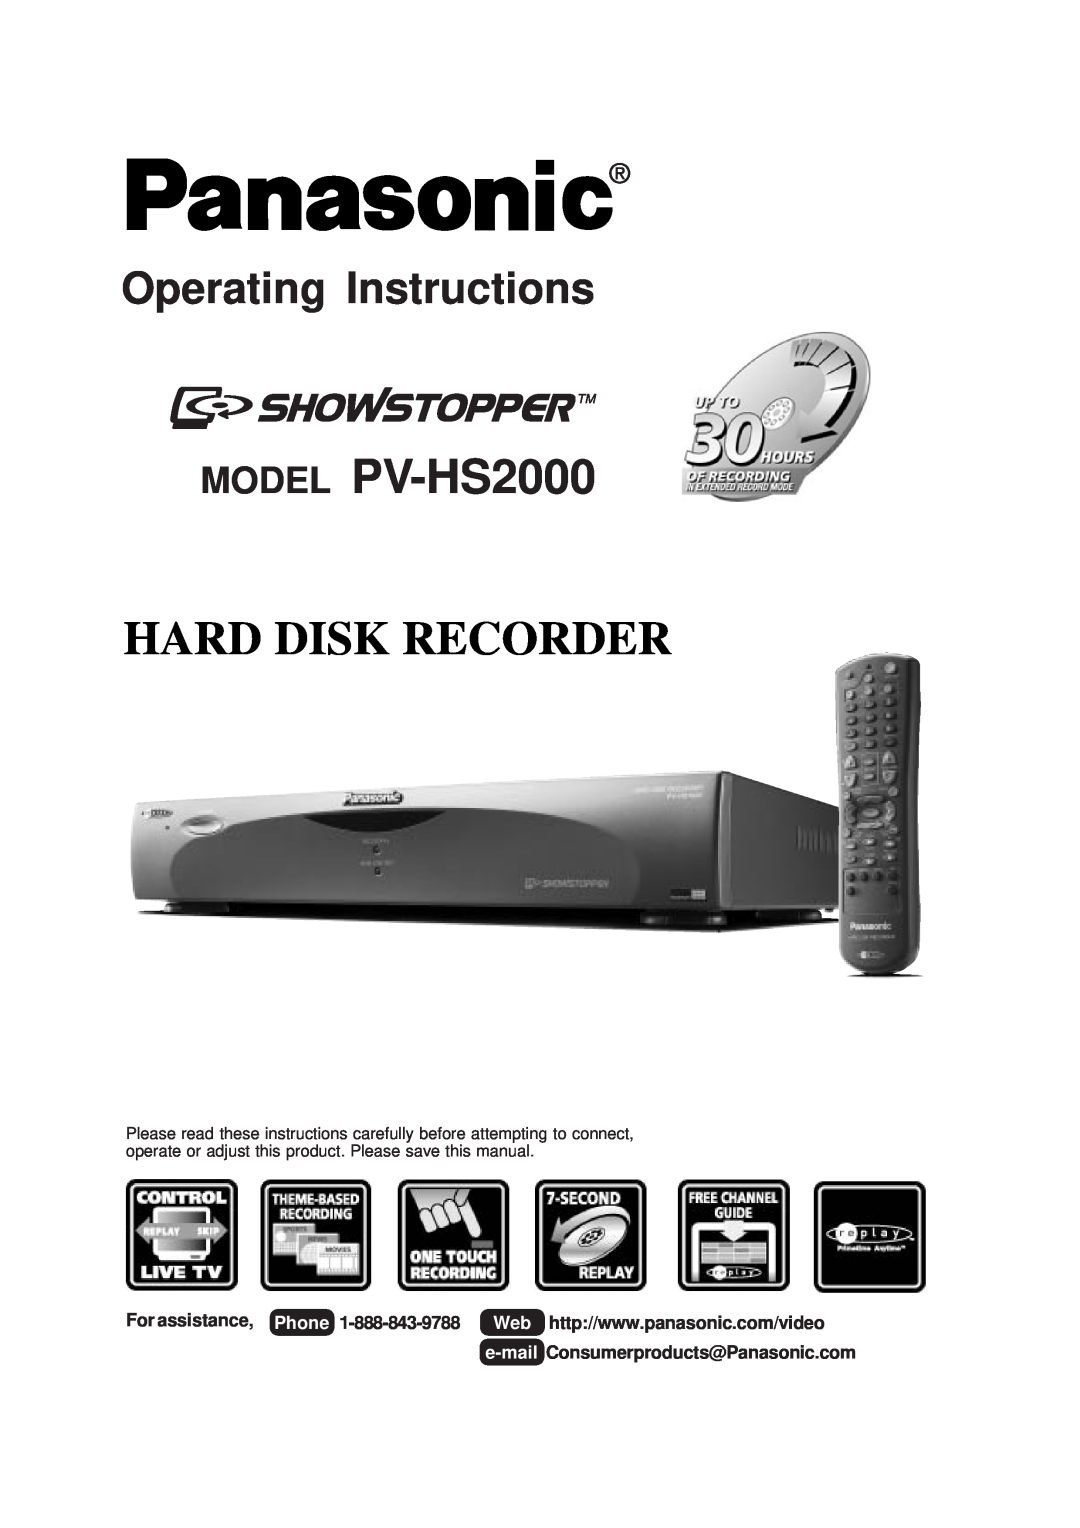 Panasonic operating instructions MODEL PV-HS2000, Operating Instructions, Hard Disk Recorder 